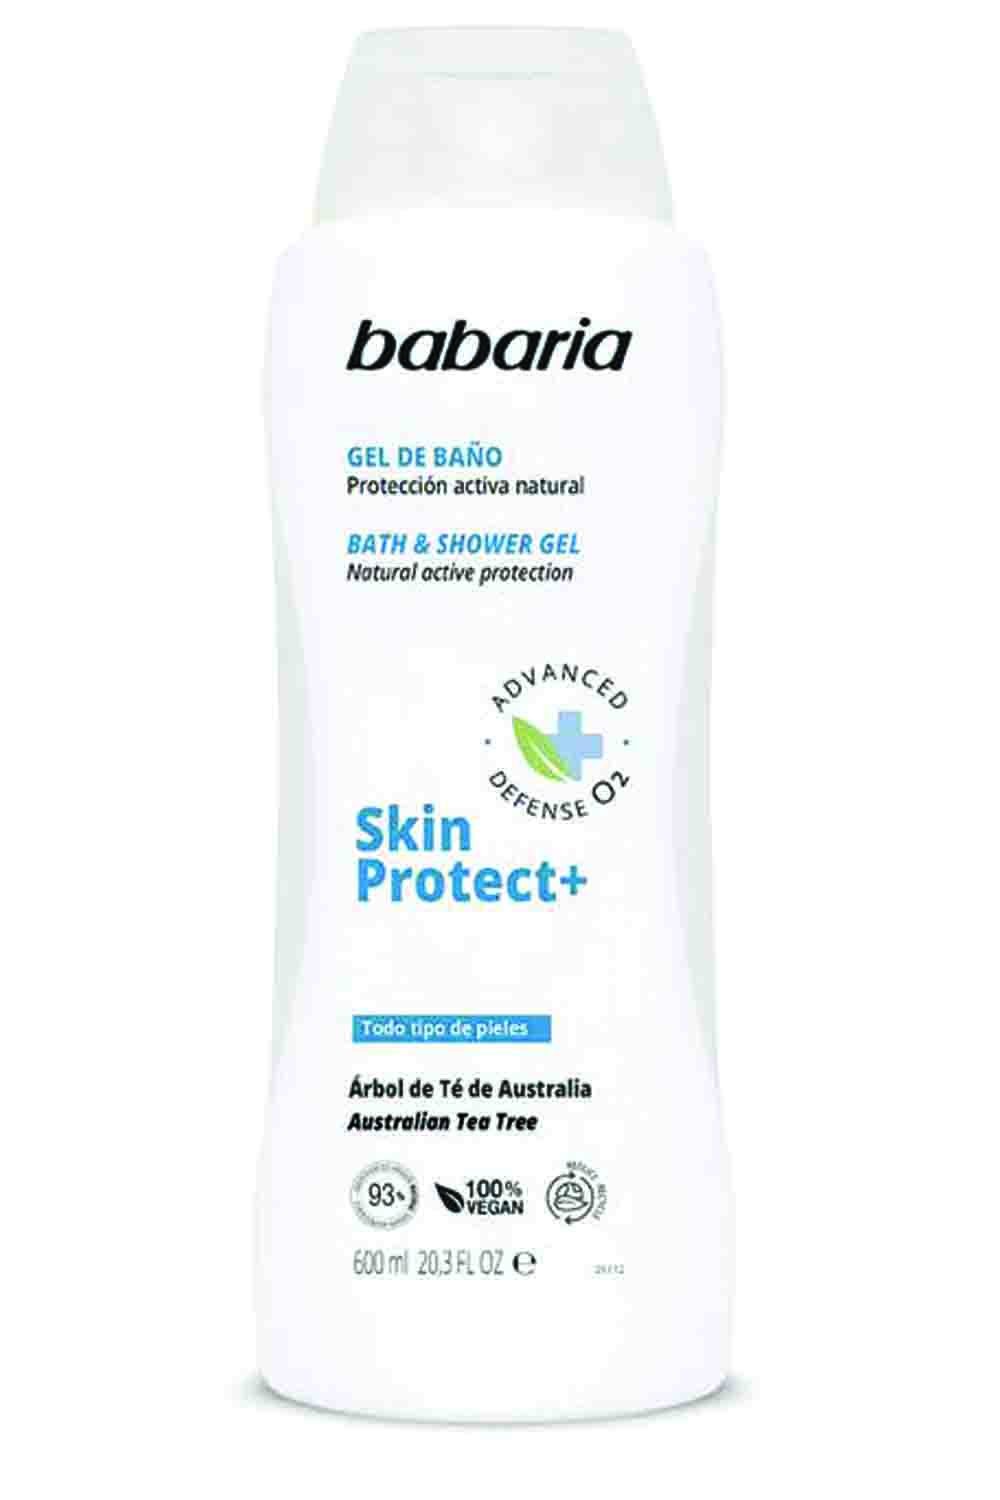 Babaria Bath and Shower Gel Skin Protect+